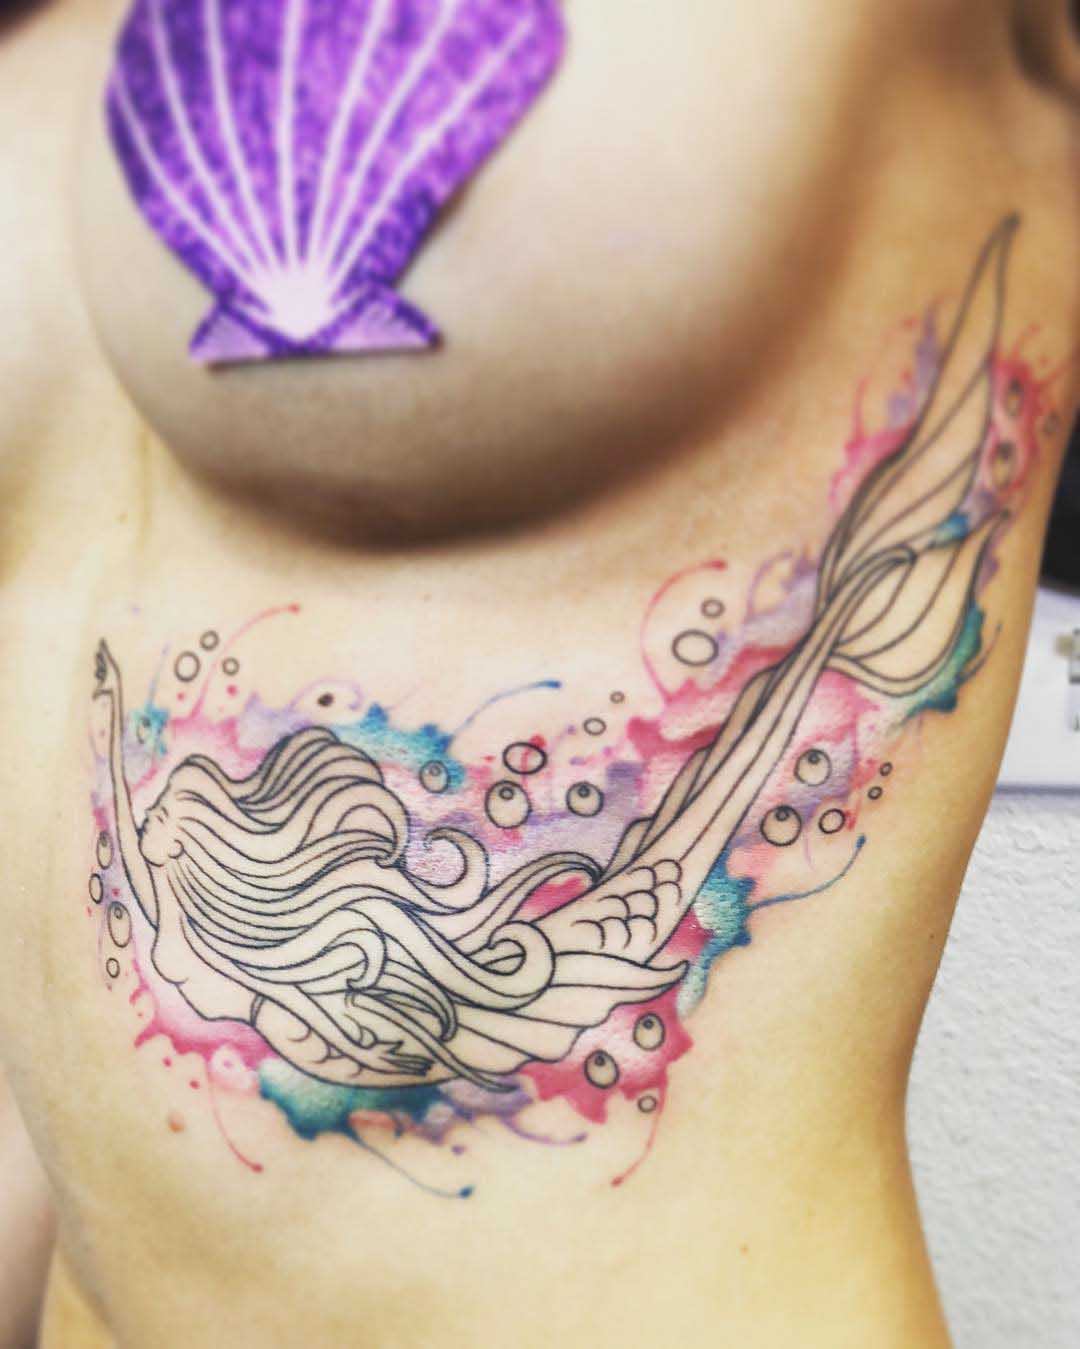 Feminine under breast tattoo